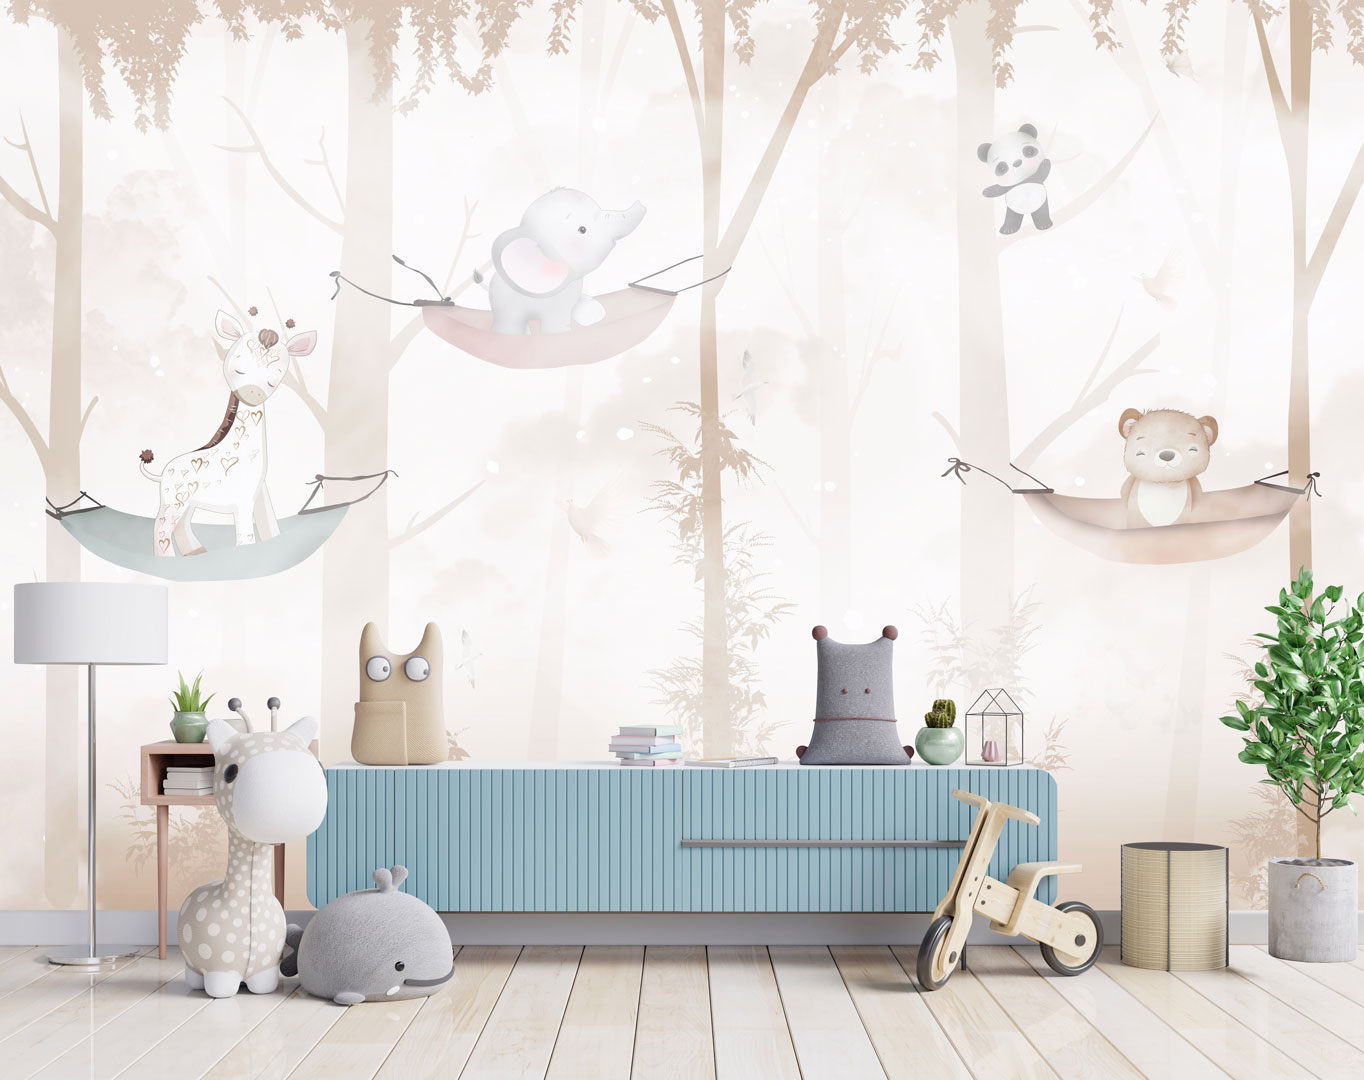 Pastel children's wallpaper FOREST SLEEP, animals in the forest on hammocks, giraffe, elephant, teddy bear, panda - Dekoori image 2